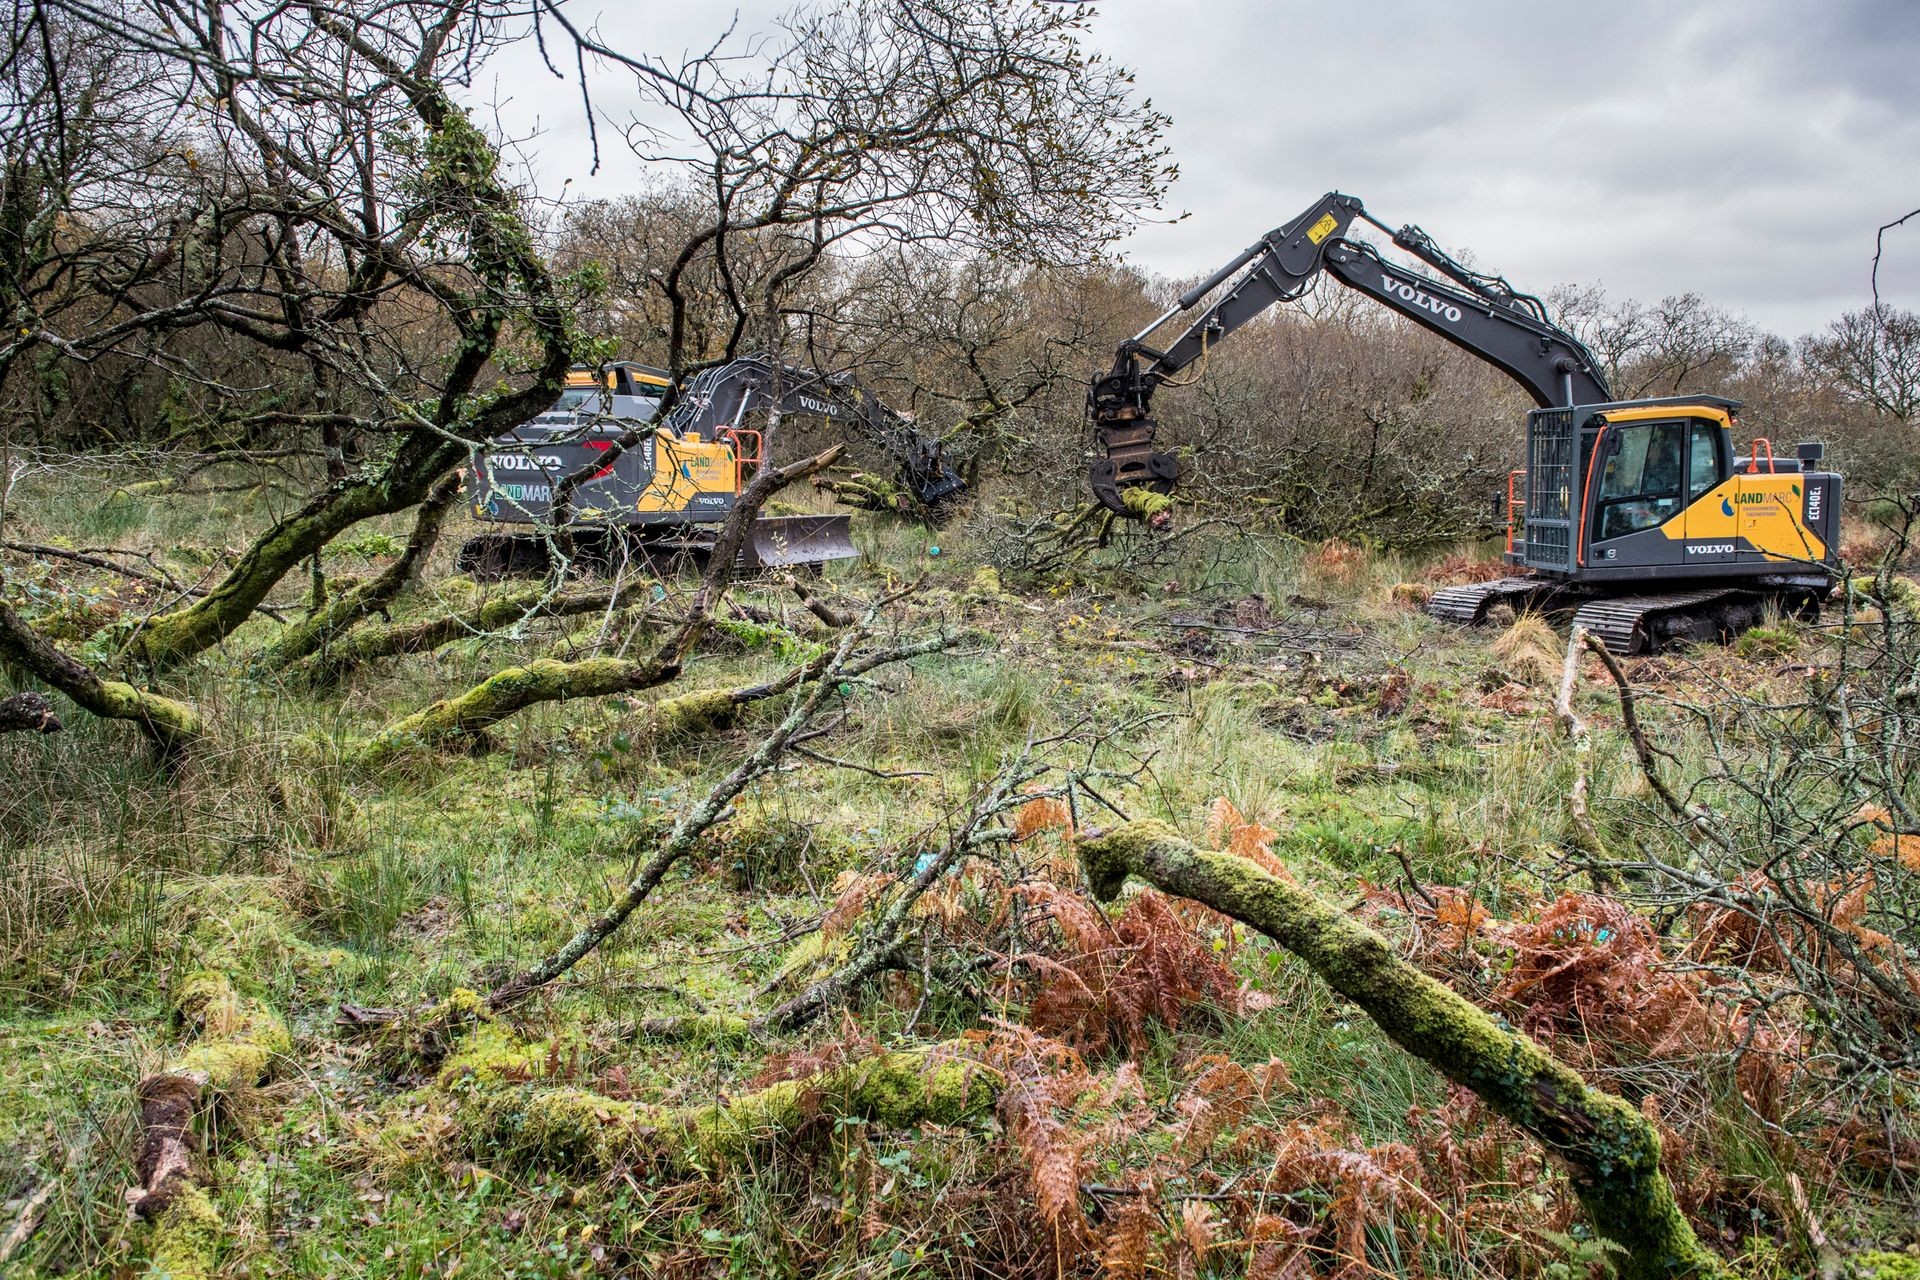 Two Volvo excavators undertaking forestry & woodland management